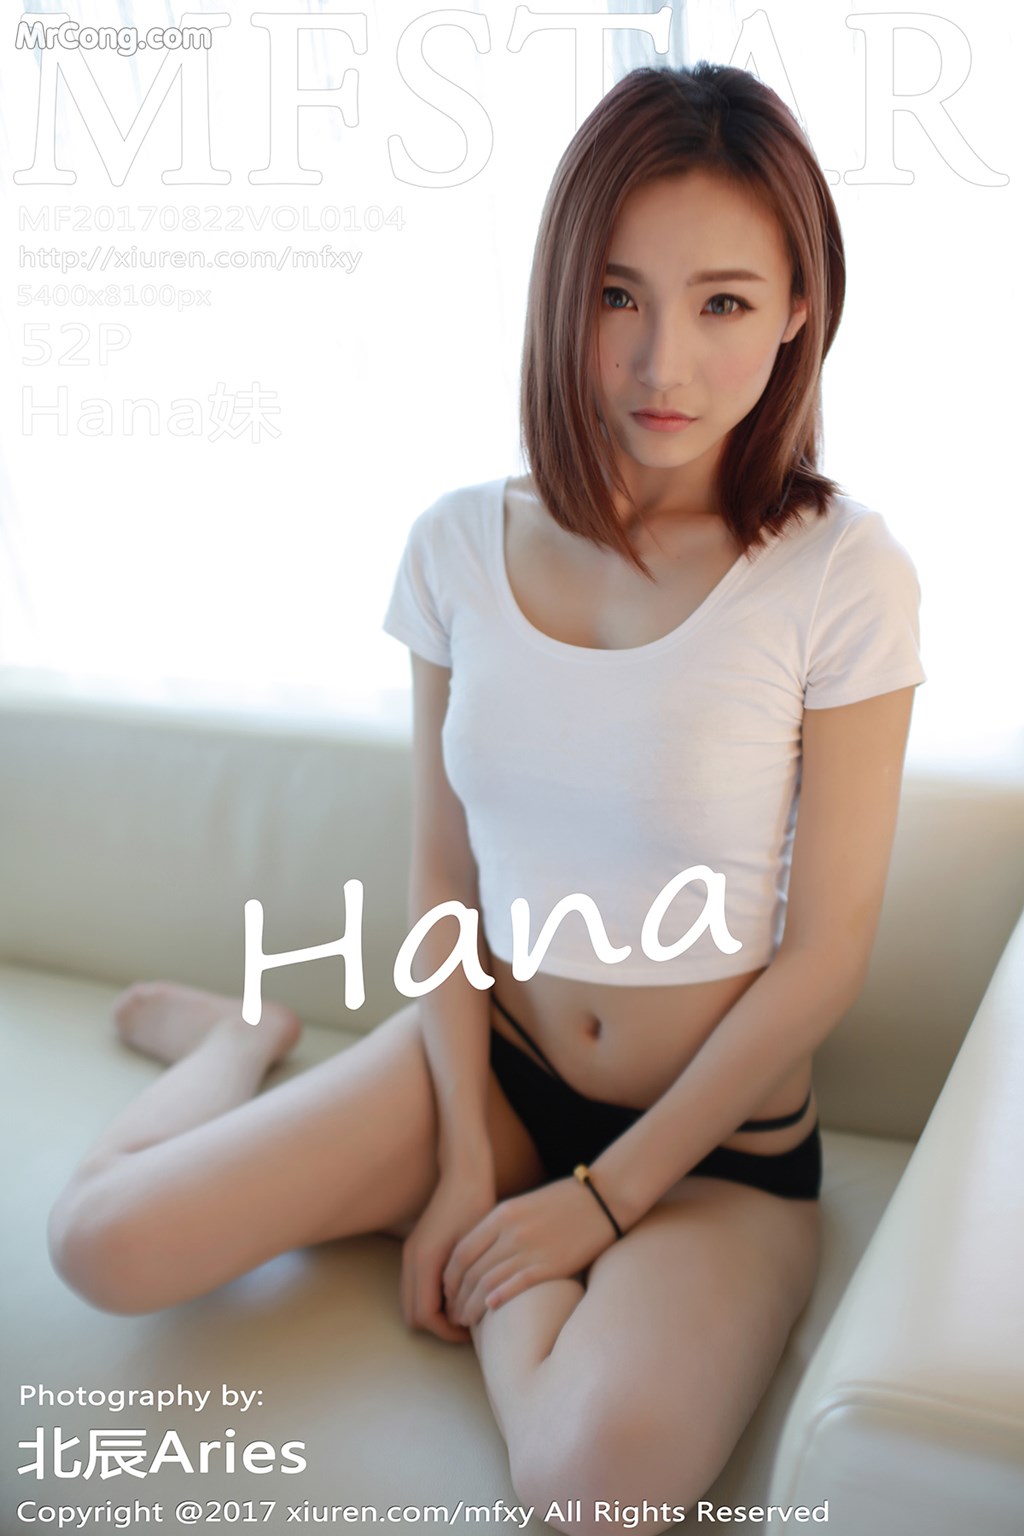 MFStar Vol.104: Hana Model 妹 (53 photos) photo 1-0